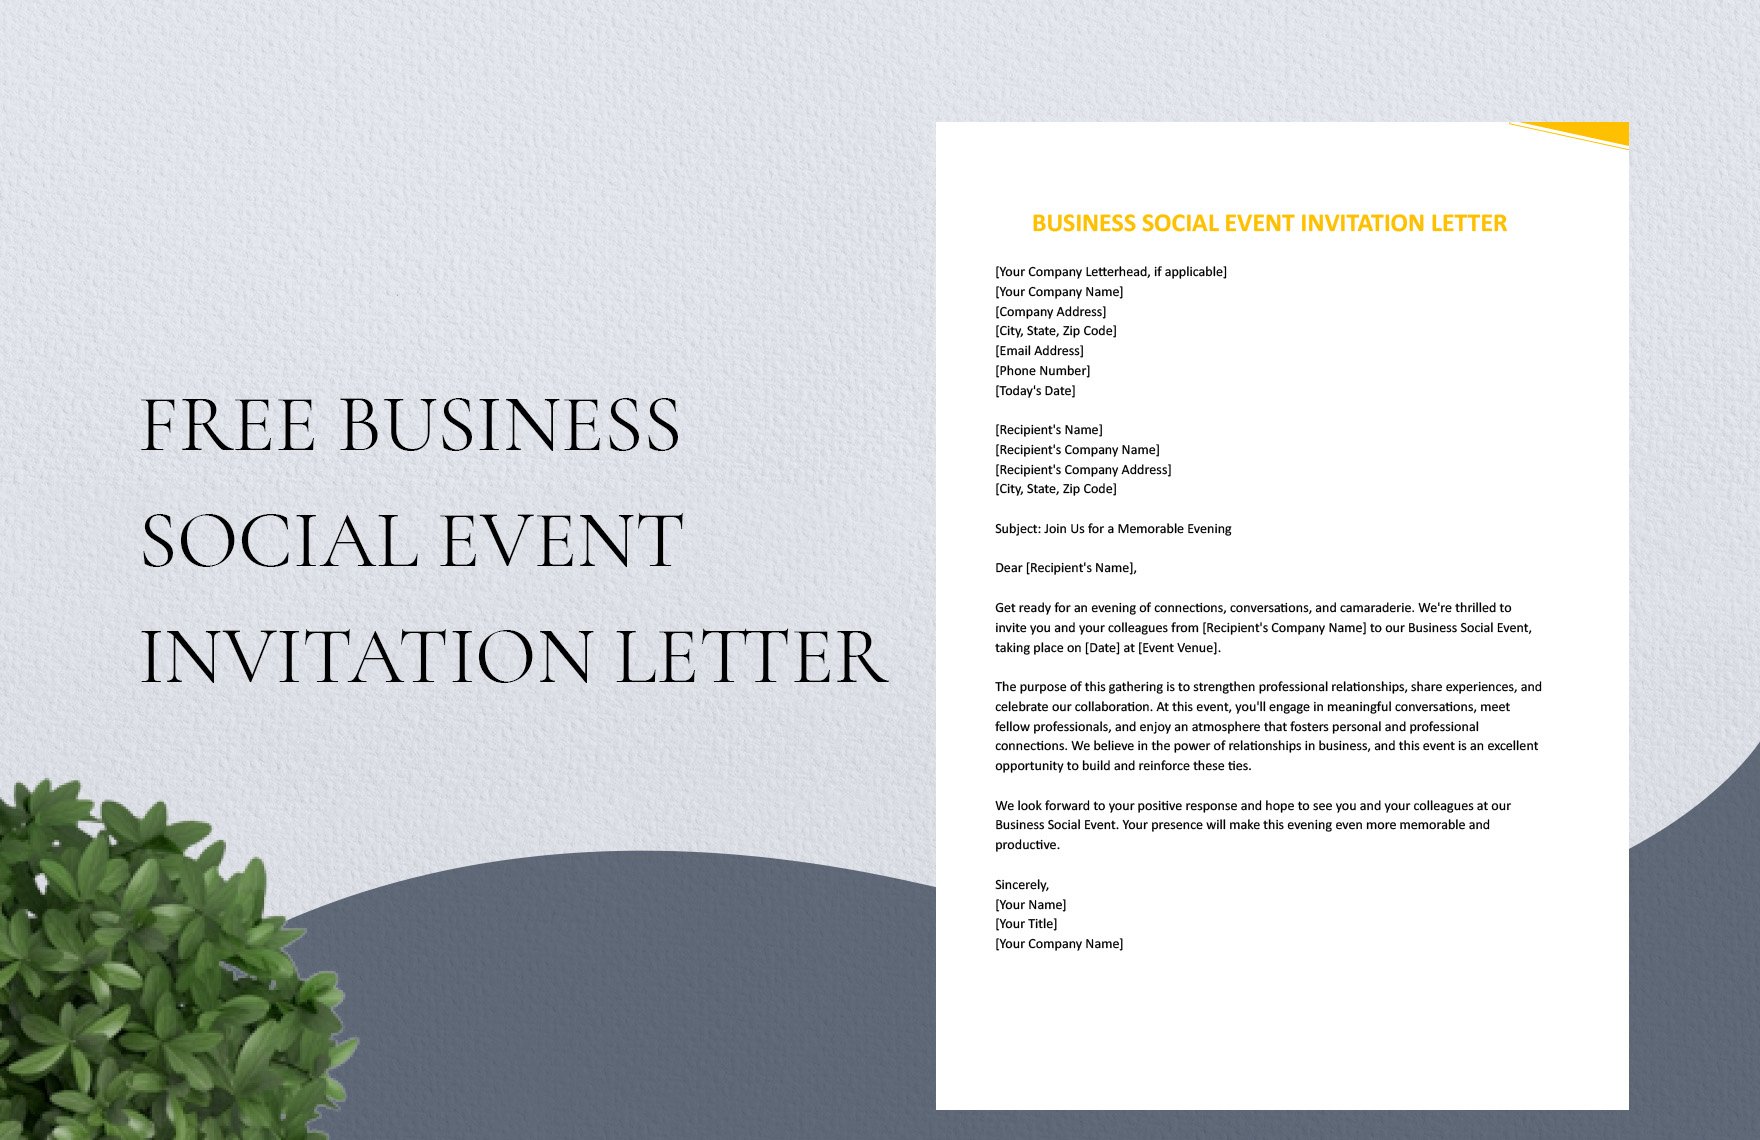 Business Social Event Invitation Letter